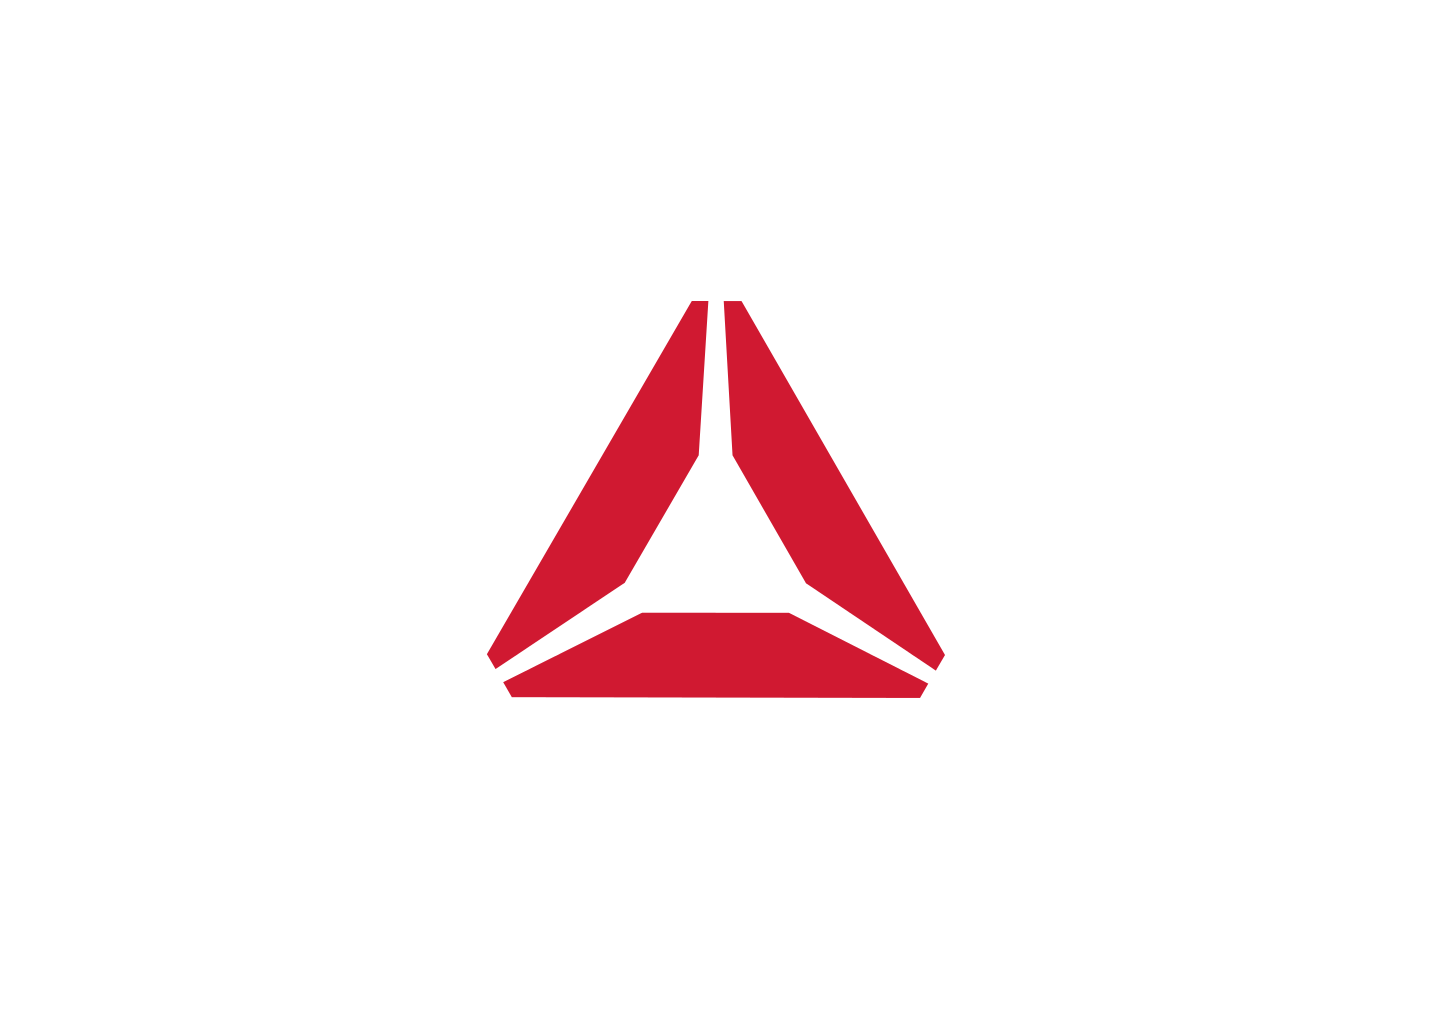 Triangle Company Logo - Red and white triangle Logos